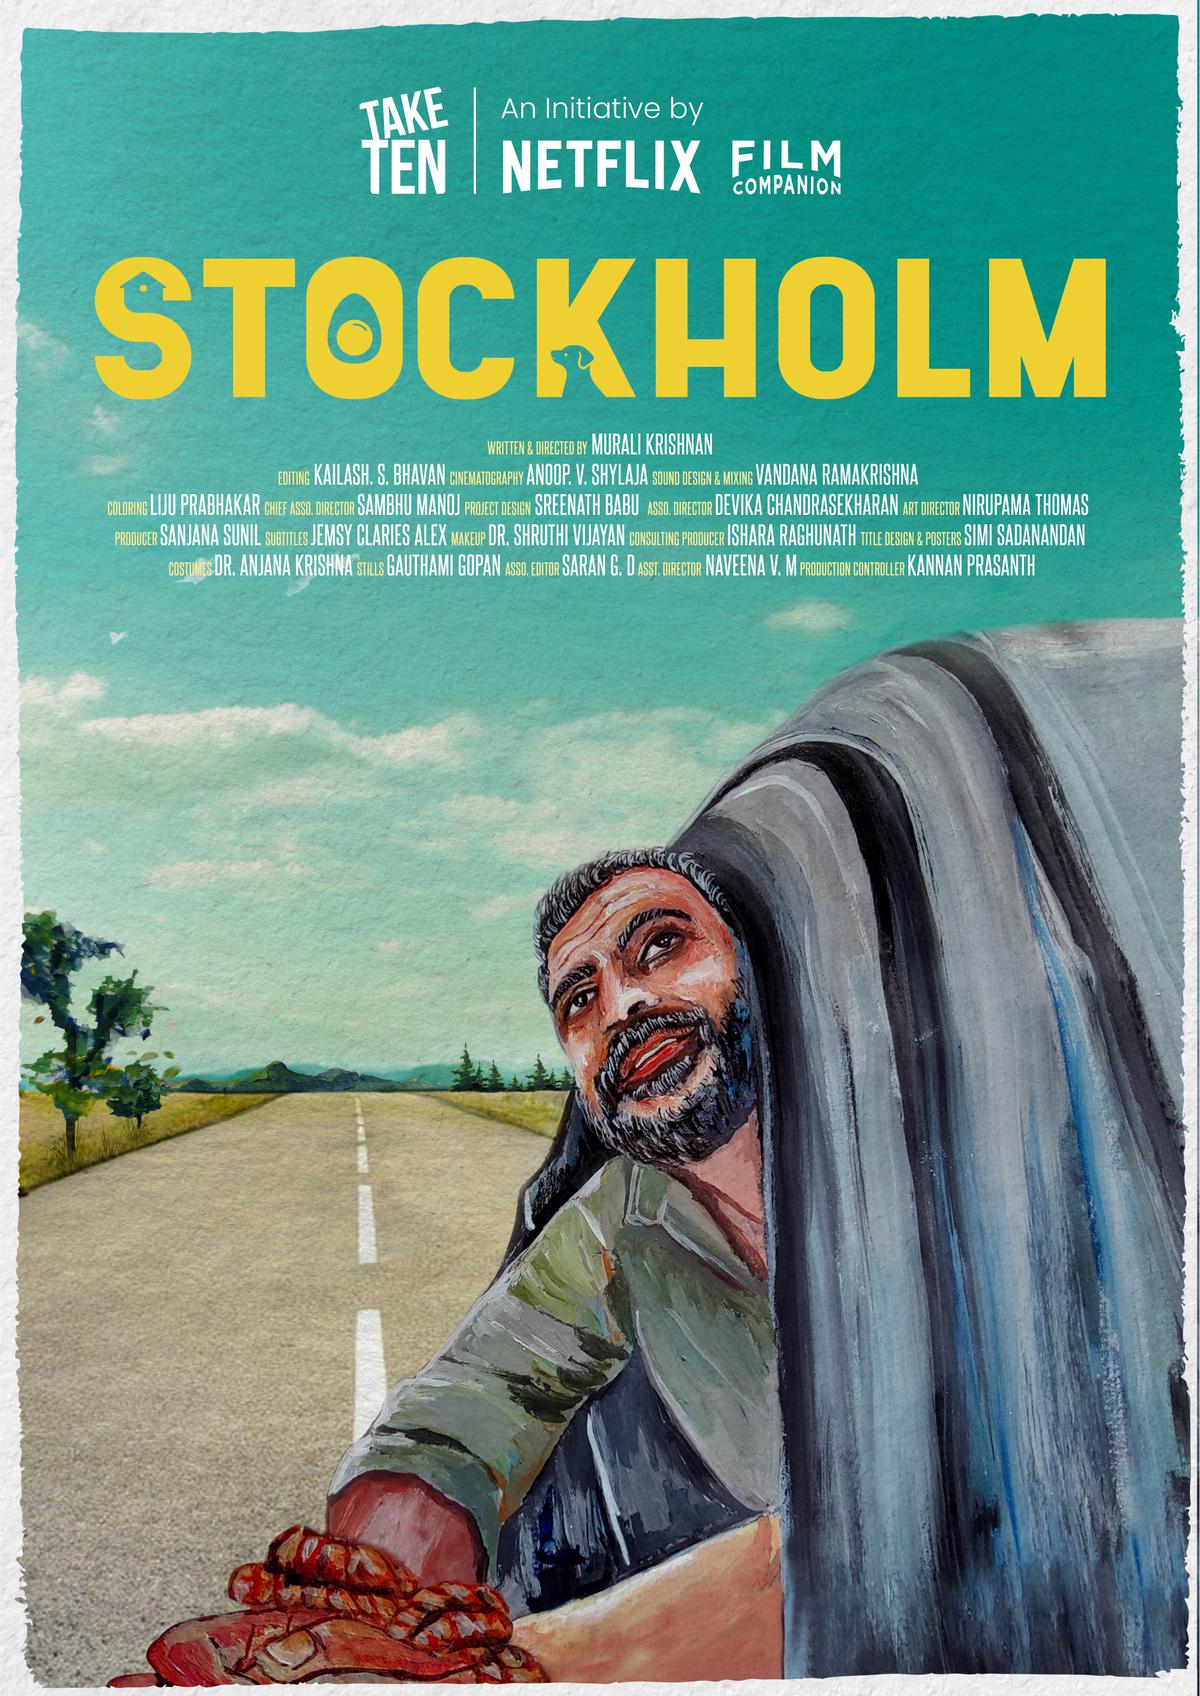 Poster of the short film Stockholm designed by Simi Sadanandan